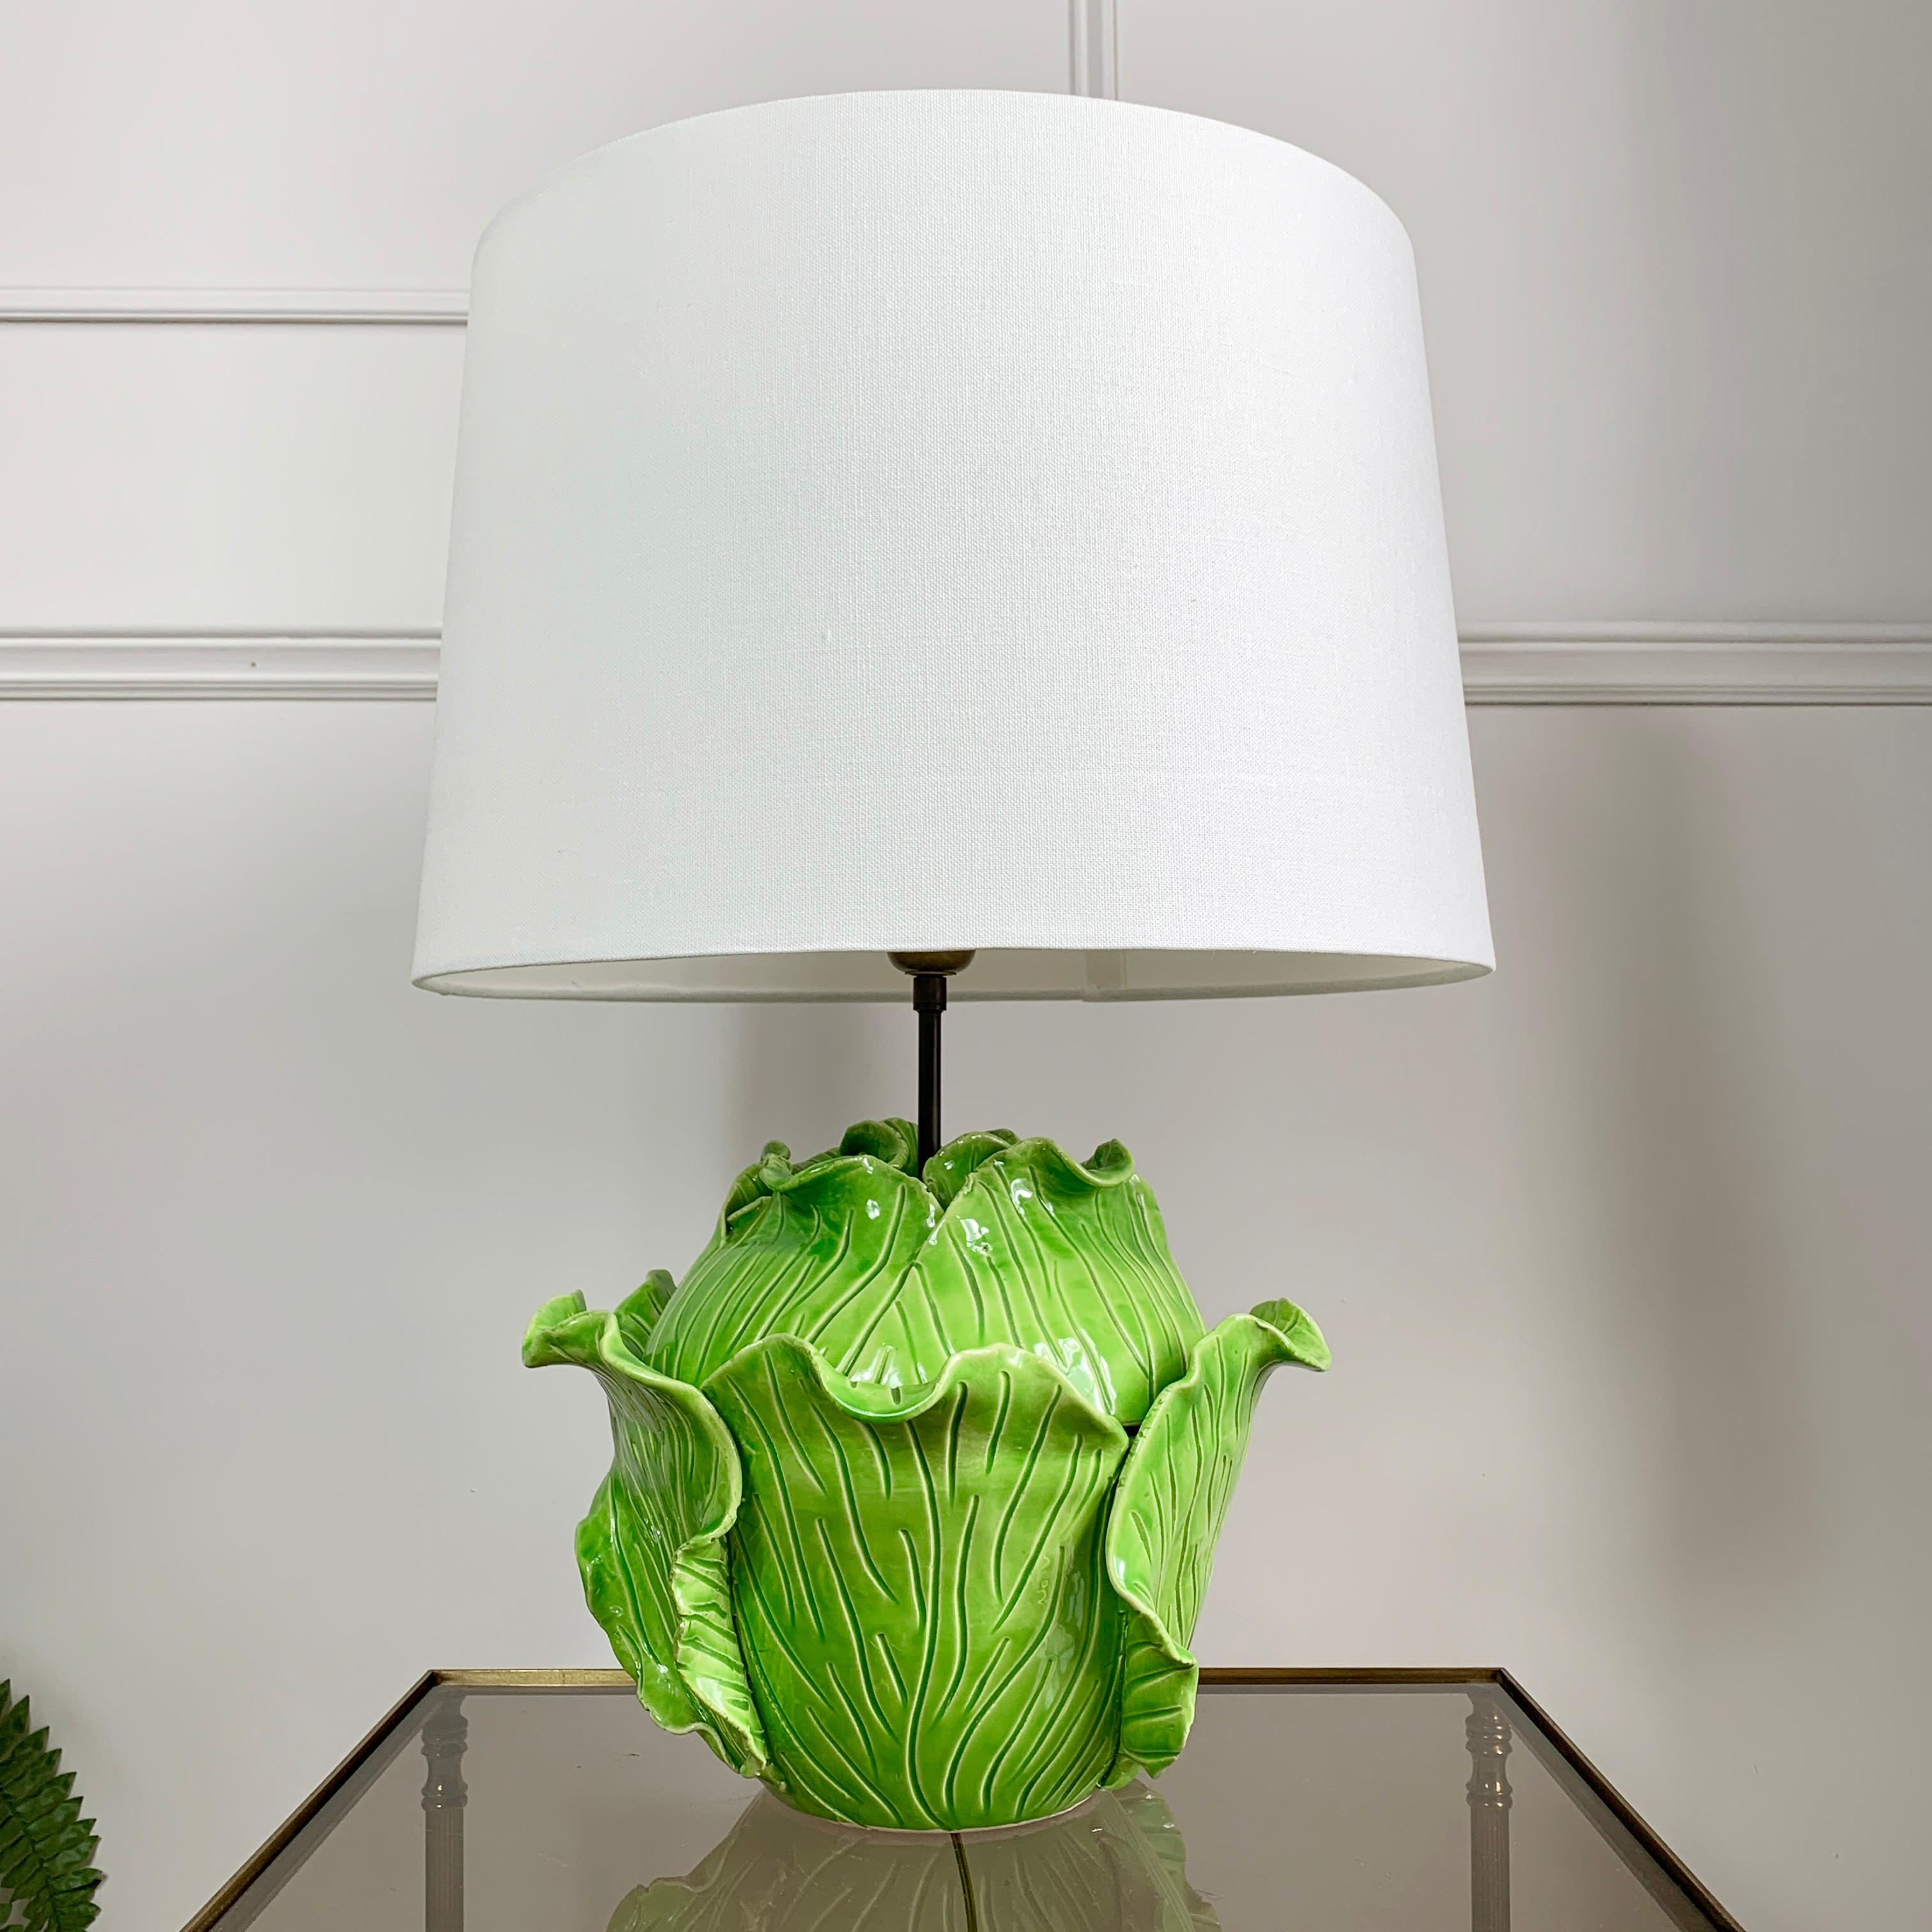 cabbage lamp